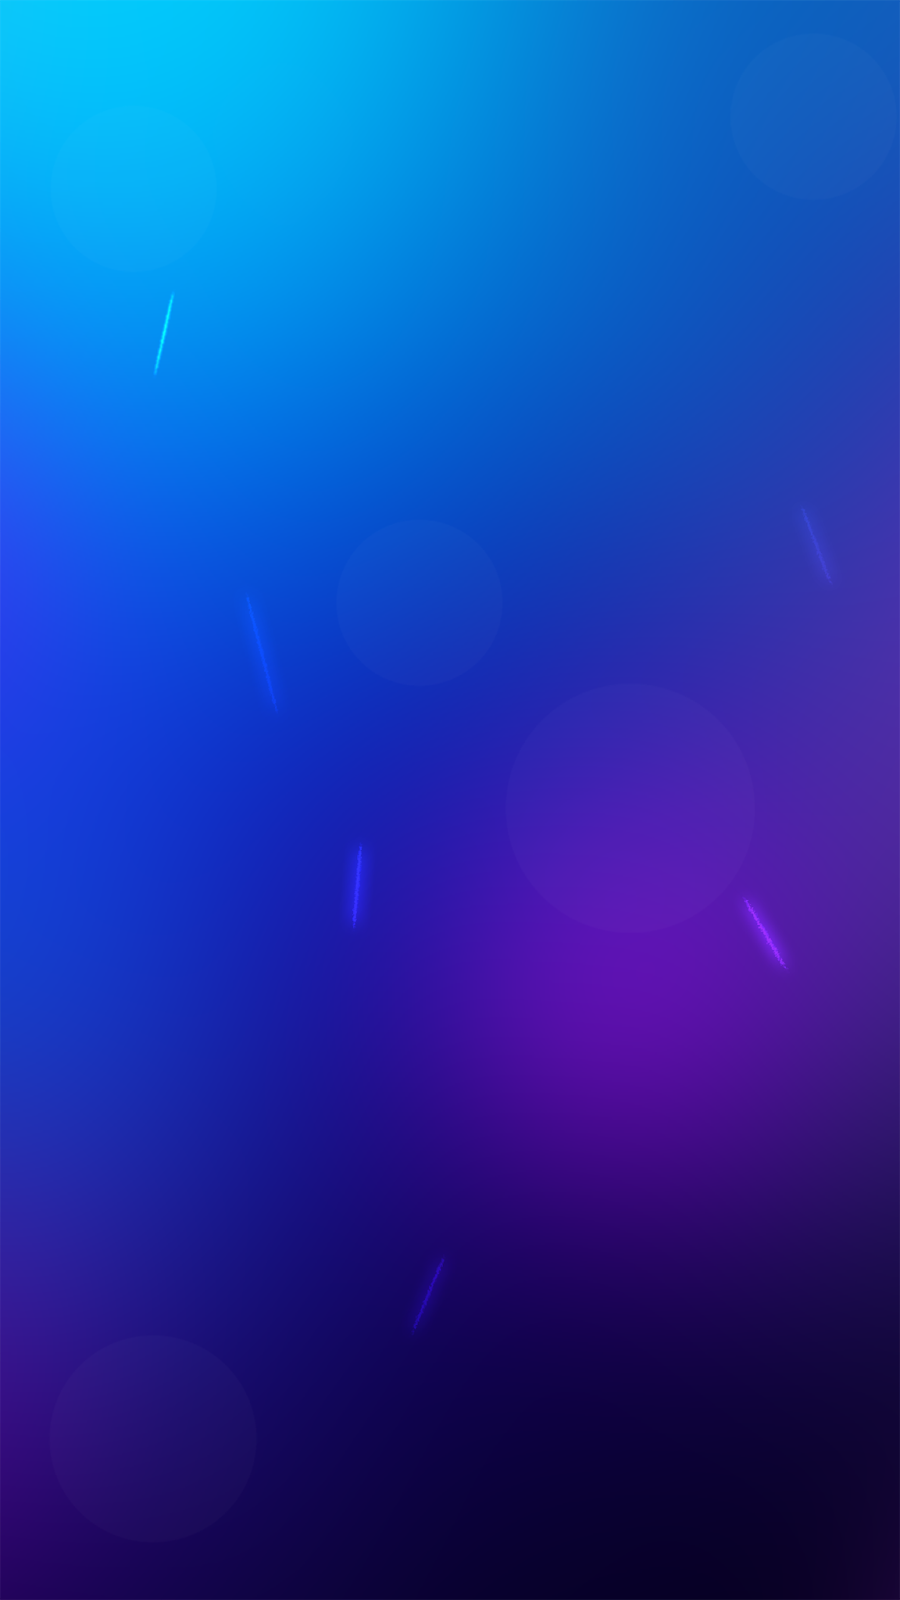 fond d'écran galaxy s7,bleu,violet,violet,bleu cobalt,bleu électrique